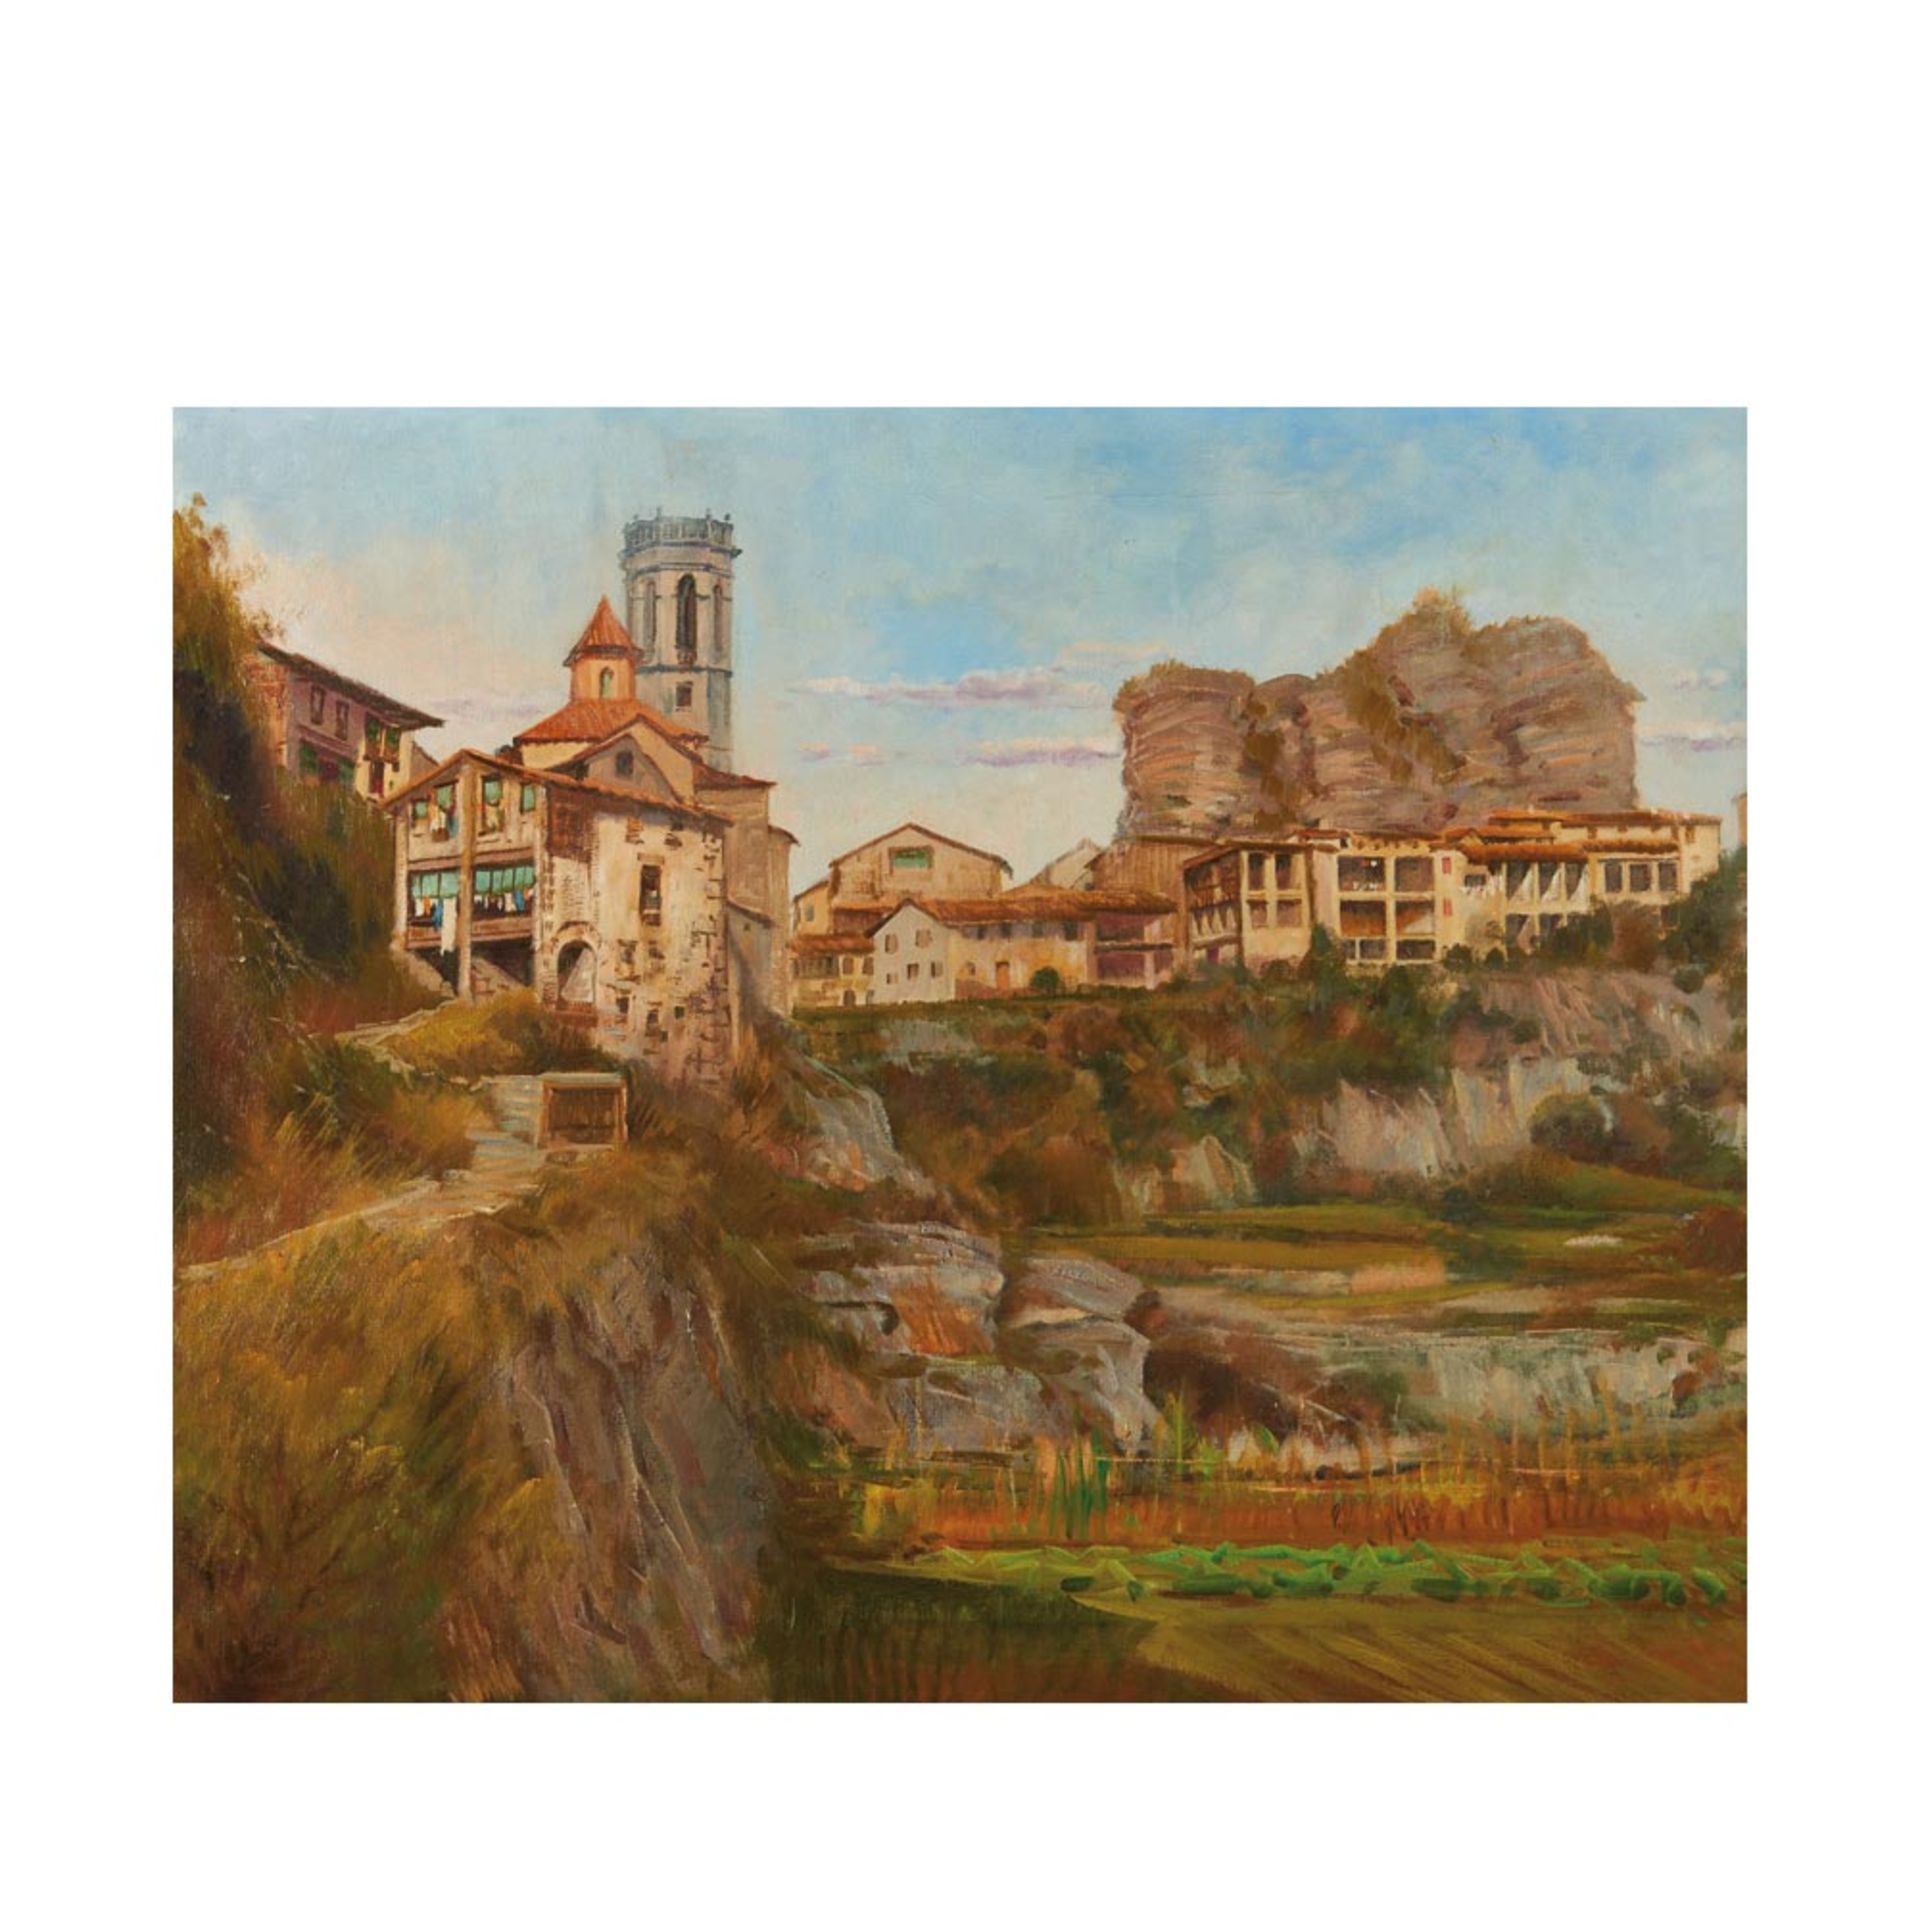 Catalan school, 20th century. Landscape. Oil on canvas